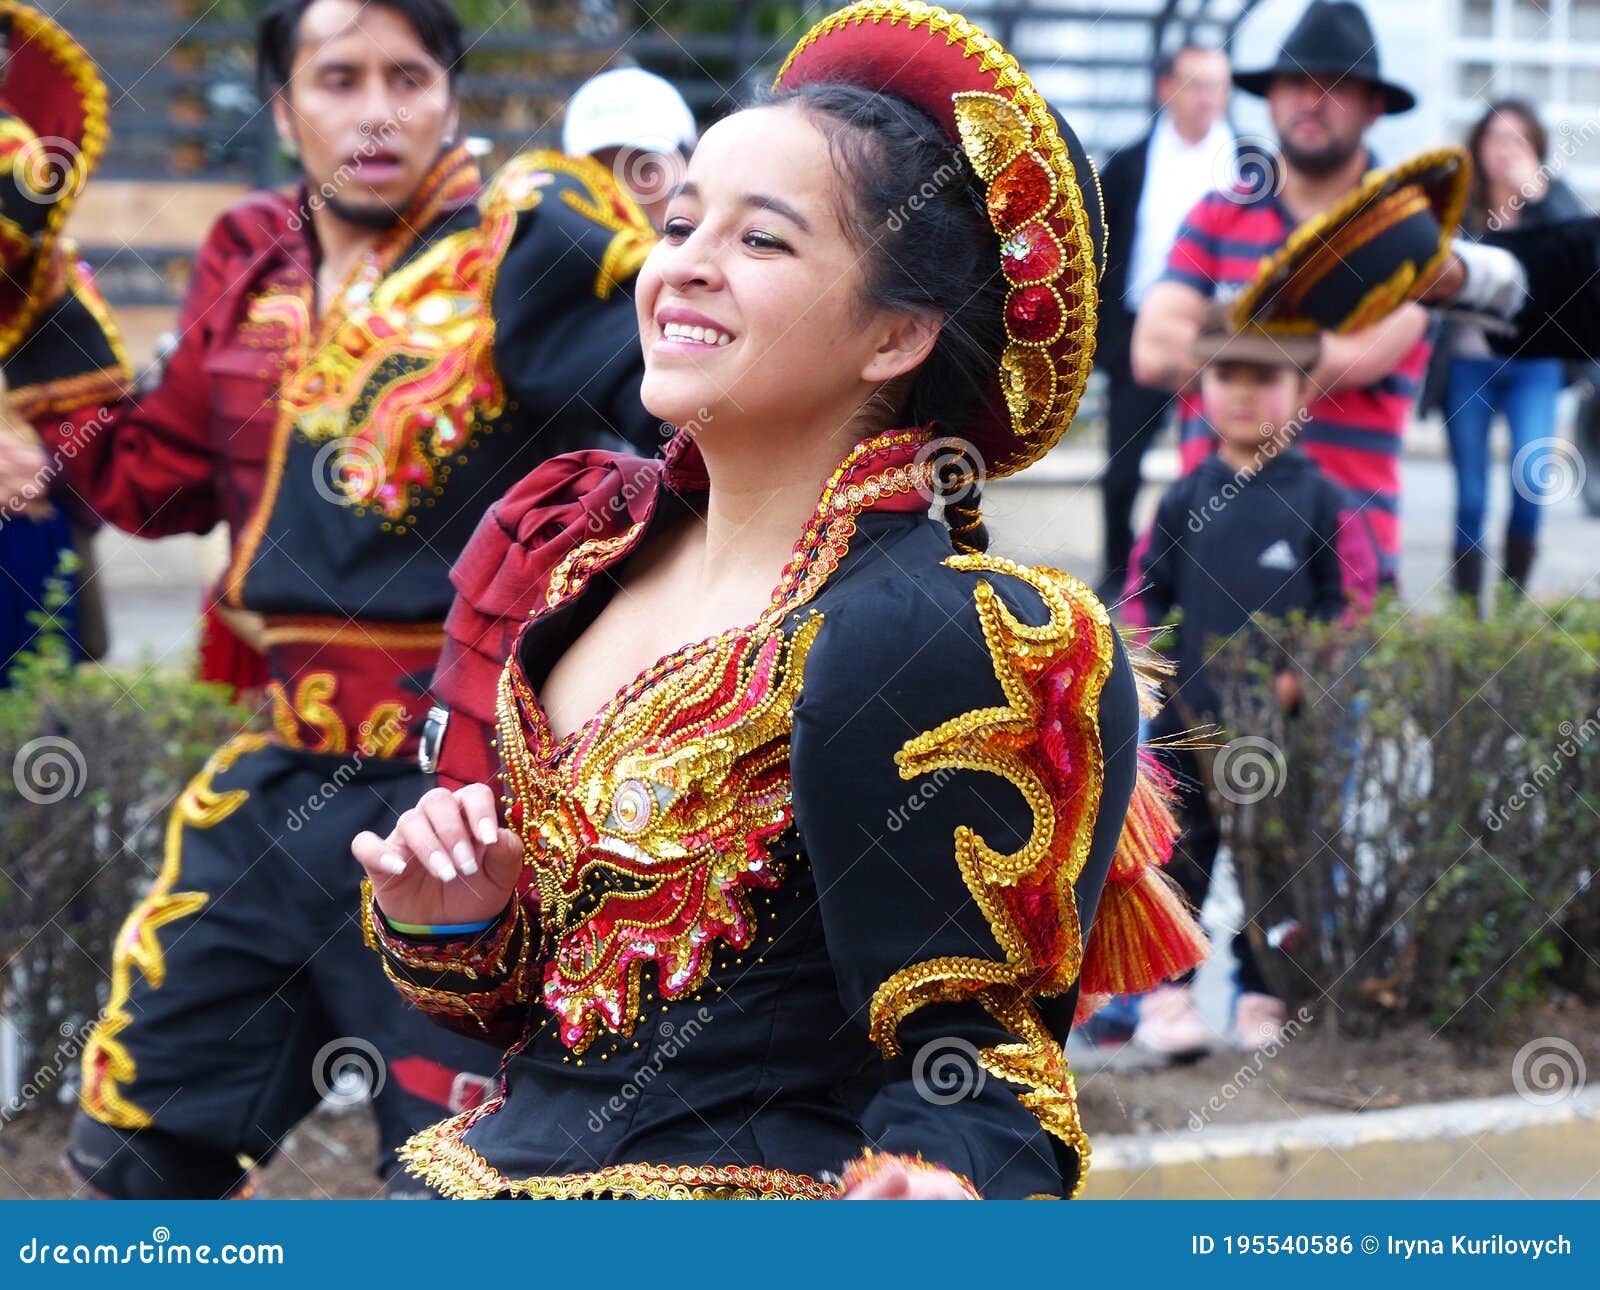 10 Most Beautiful Bolivian Women 3635